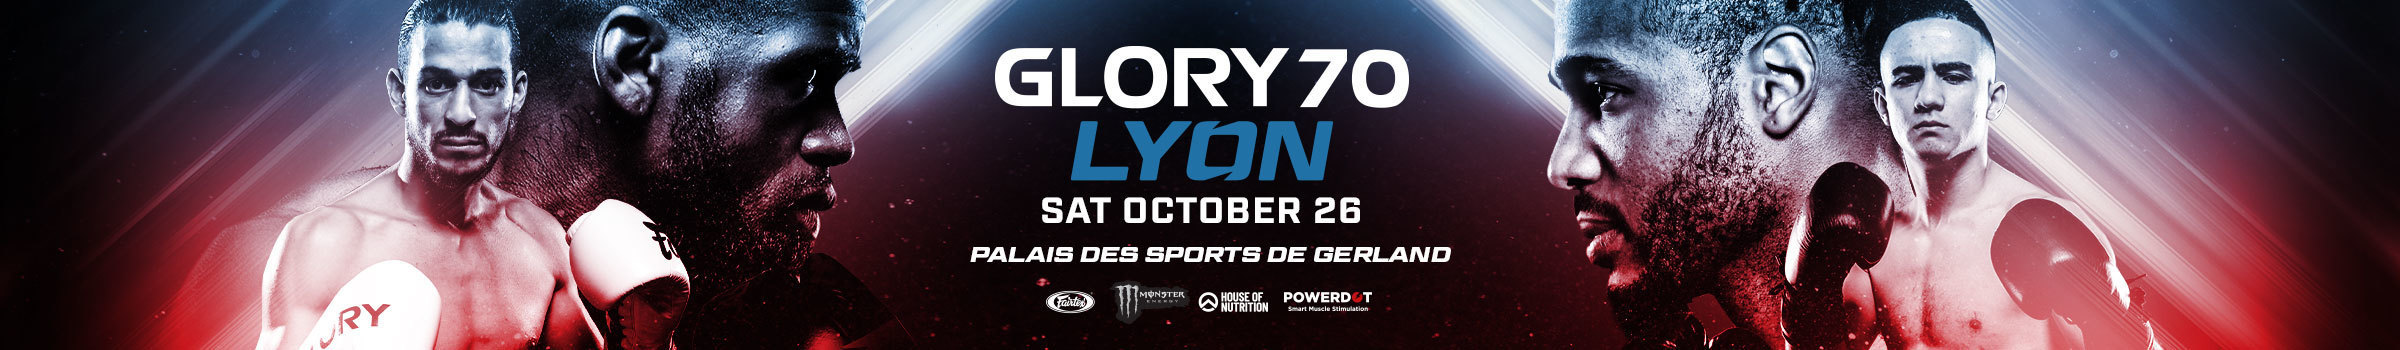 GLORY 70 Lyon